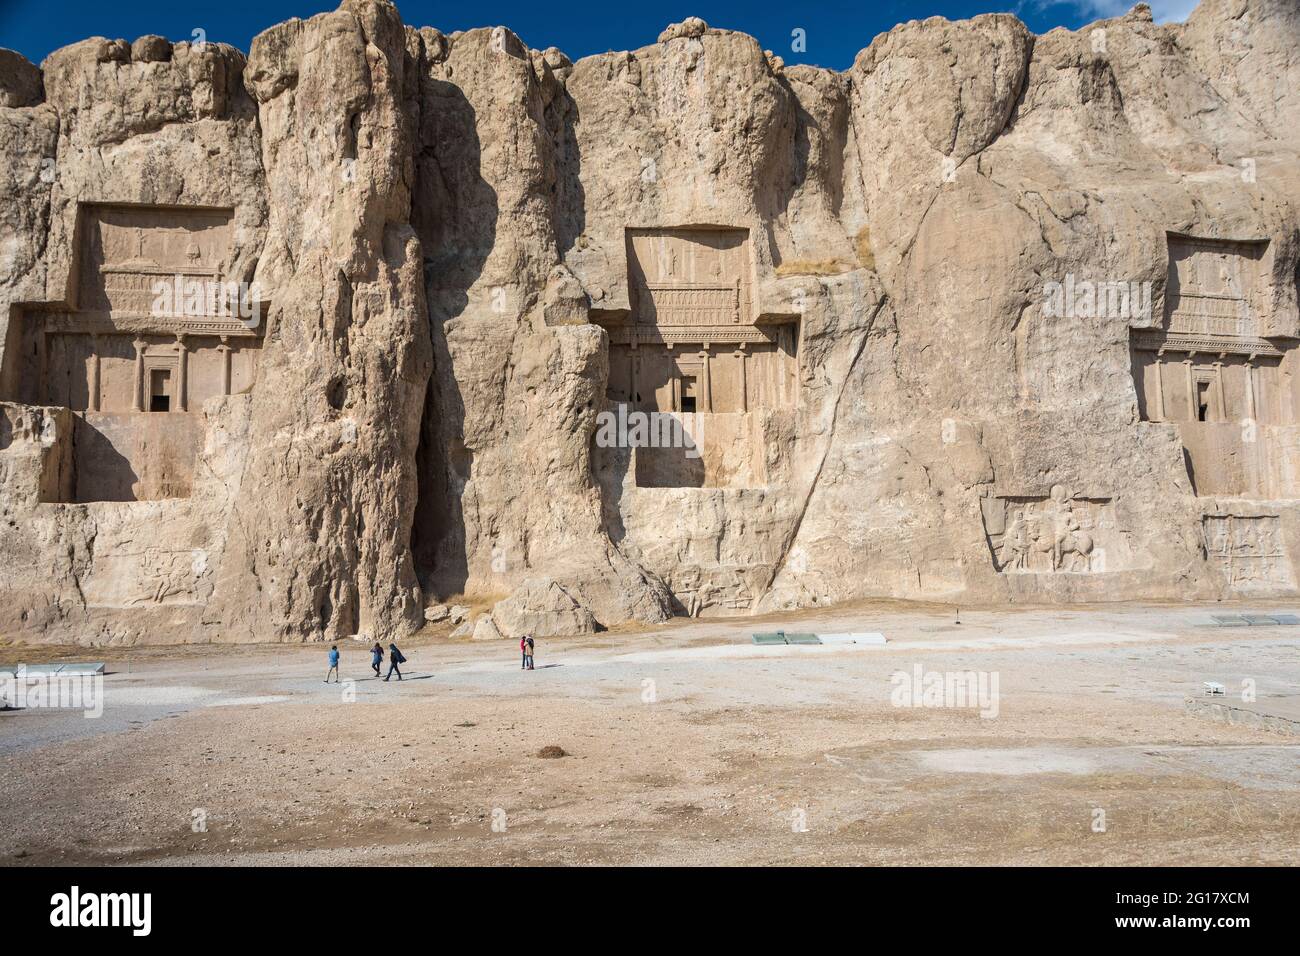 Naqsh-e Rostam,necropolis of the Achaemenid dynasty near Persepolis, with tombs of Darius II,Artaxerxes I,Darius I,cut high into the cliff face. Iran. Stock Photo